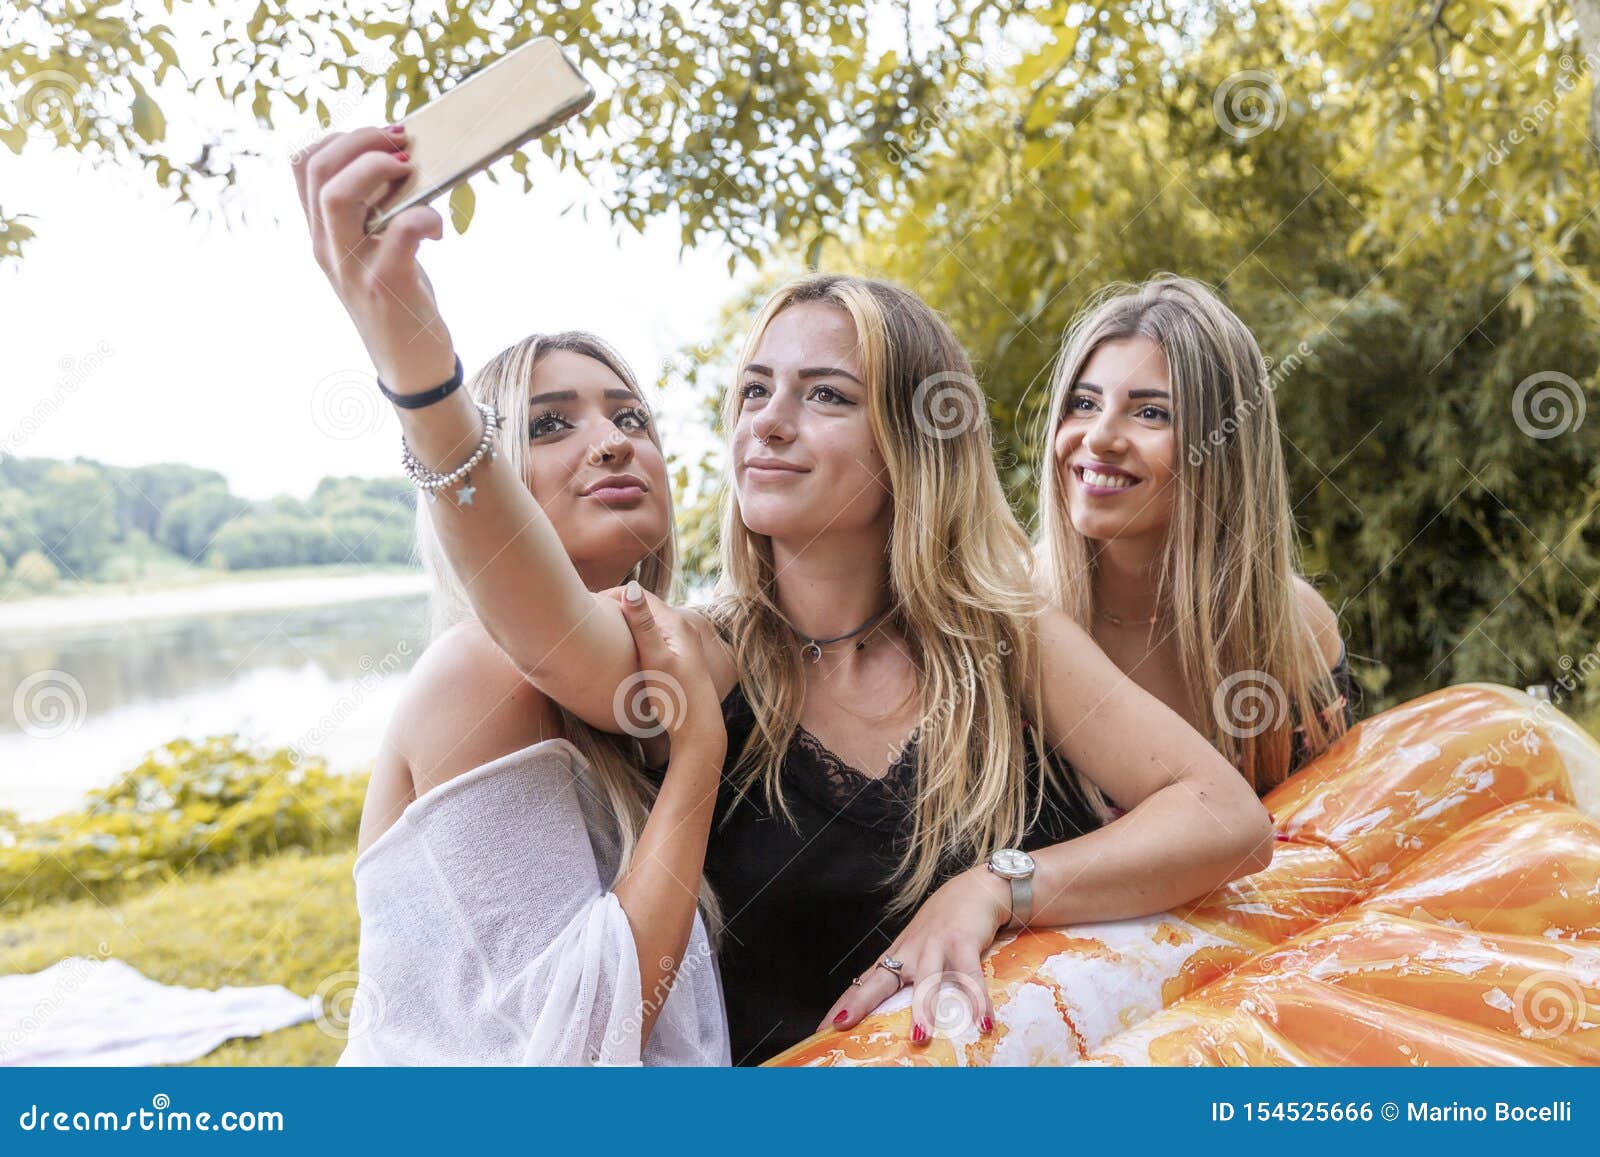 Female Millennial Girlfriends Taking A Selfie Outdoors On The River 